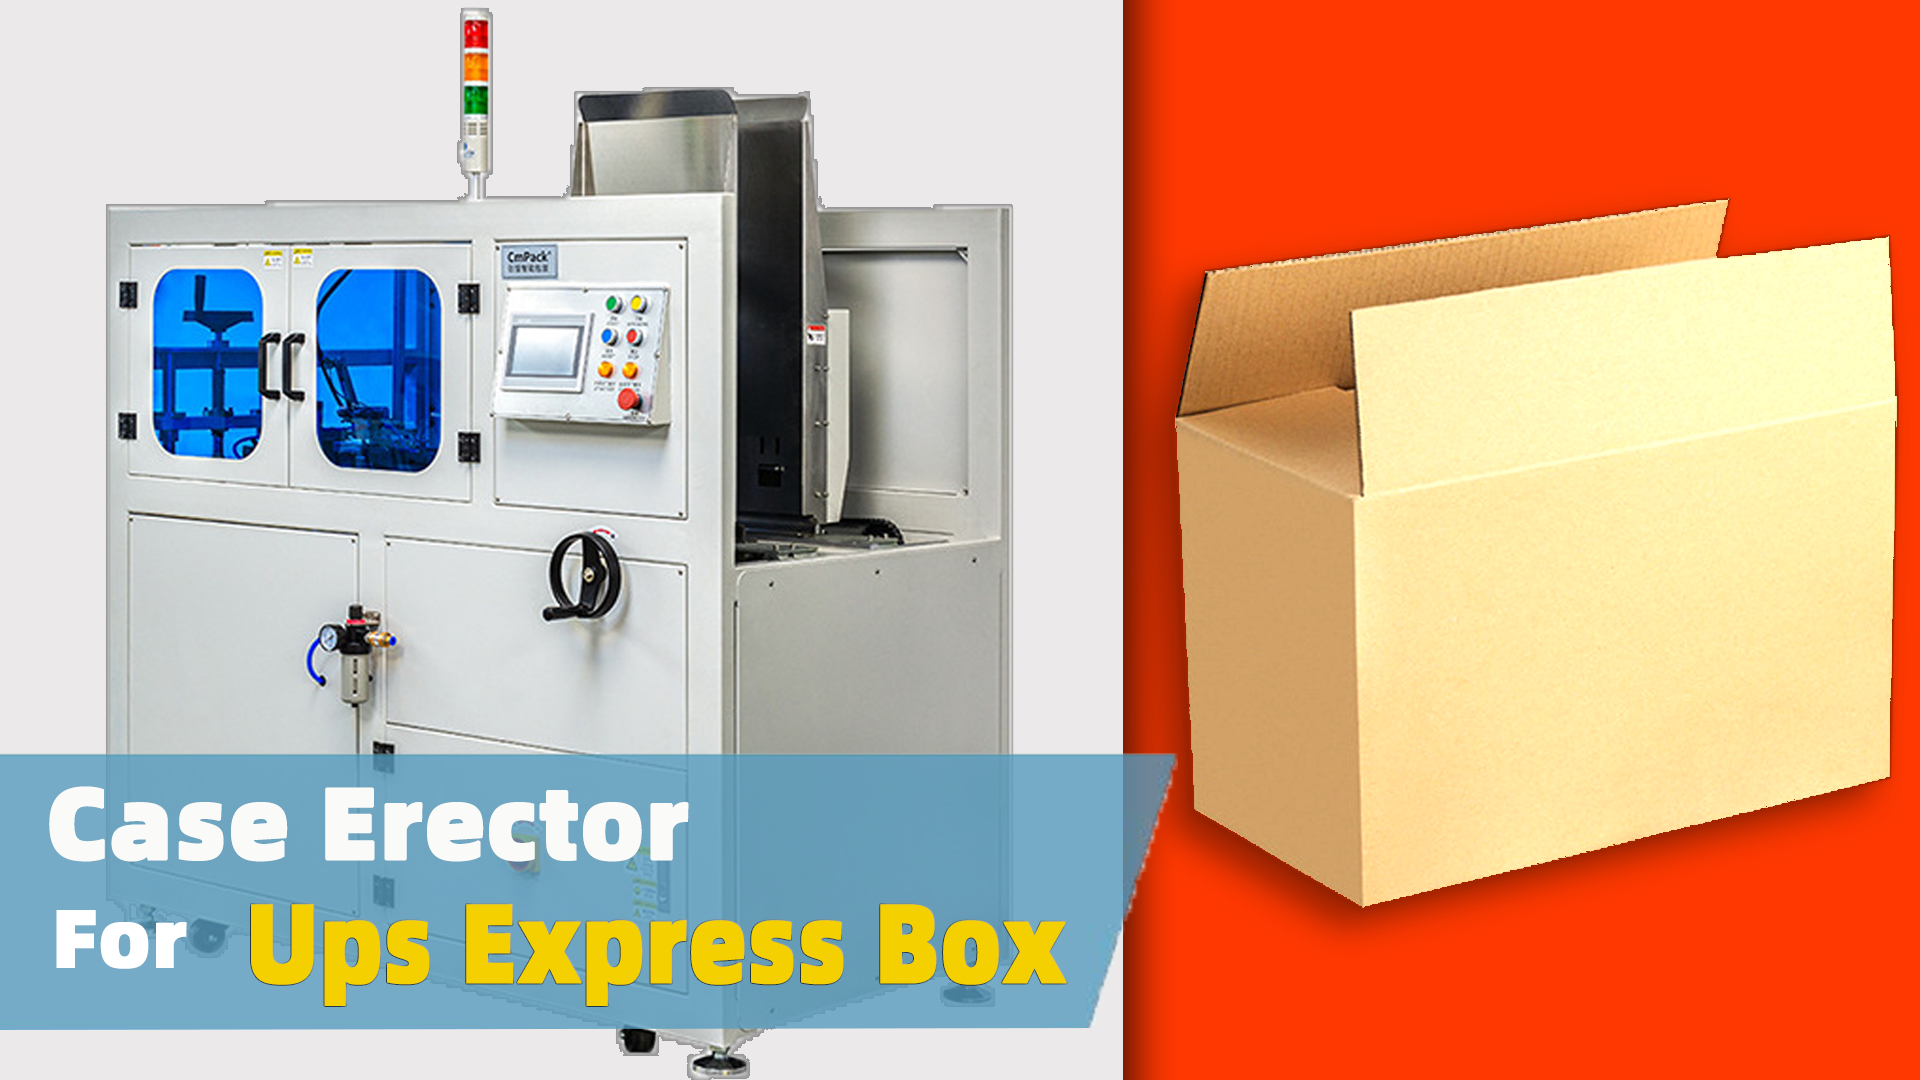 Automatic UPS Express Box Case Erector Machine